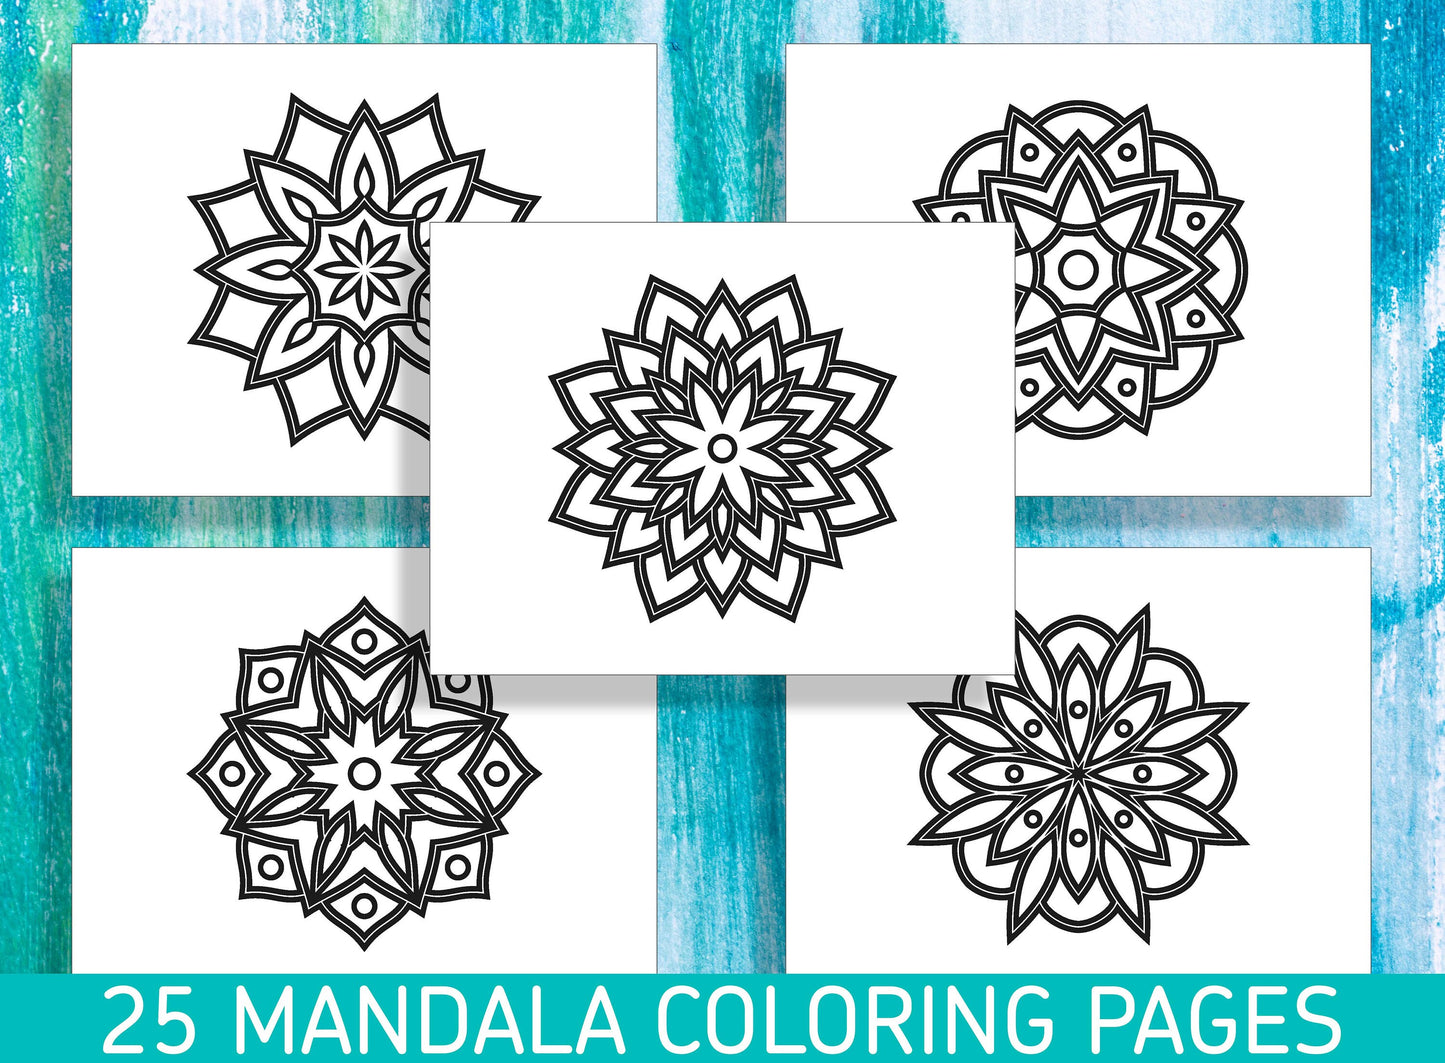 Simple Mandalas for Kids: 25 Delightful Mandala Coloring Pages for Kindergarten and Preschool Kids! - PDF File, Instant Download